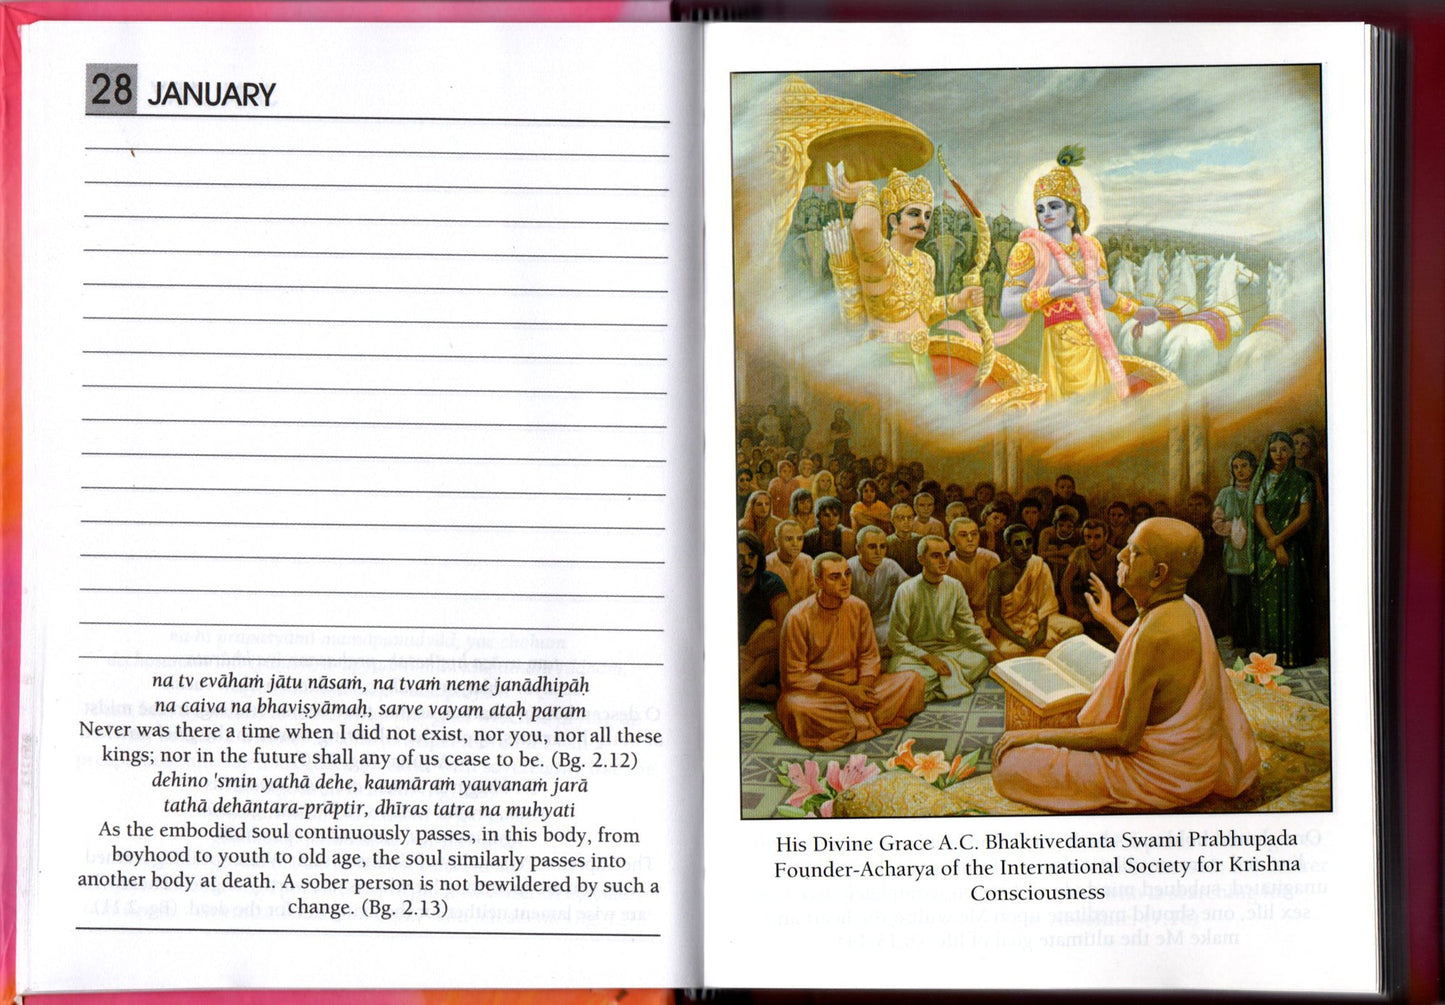 ISKCON Bhagavad-gita Meditations Diary 2022